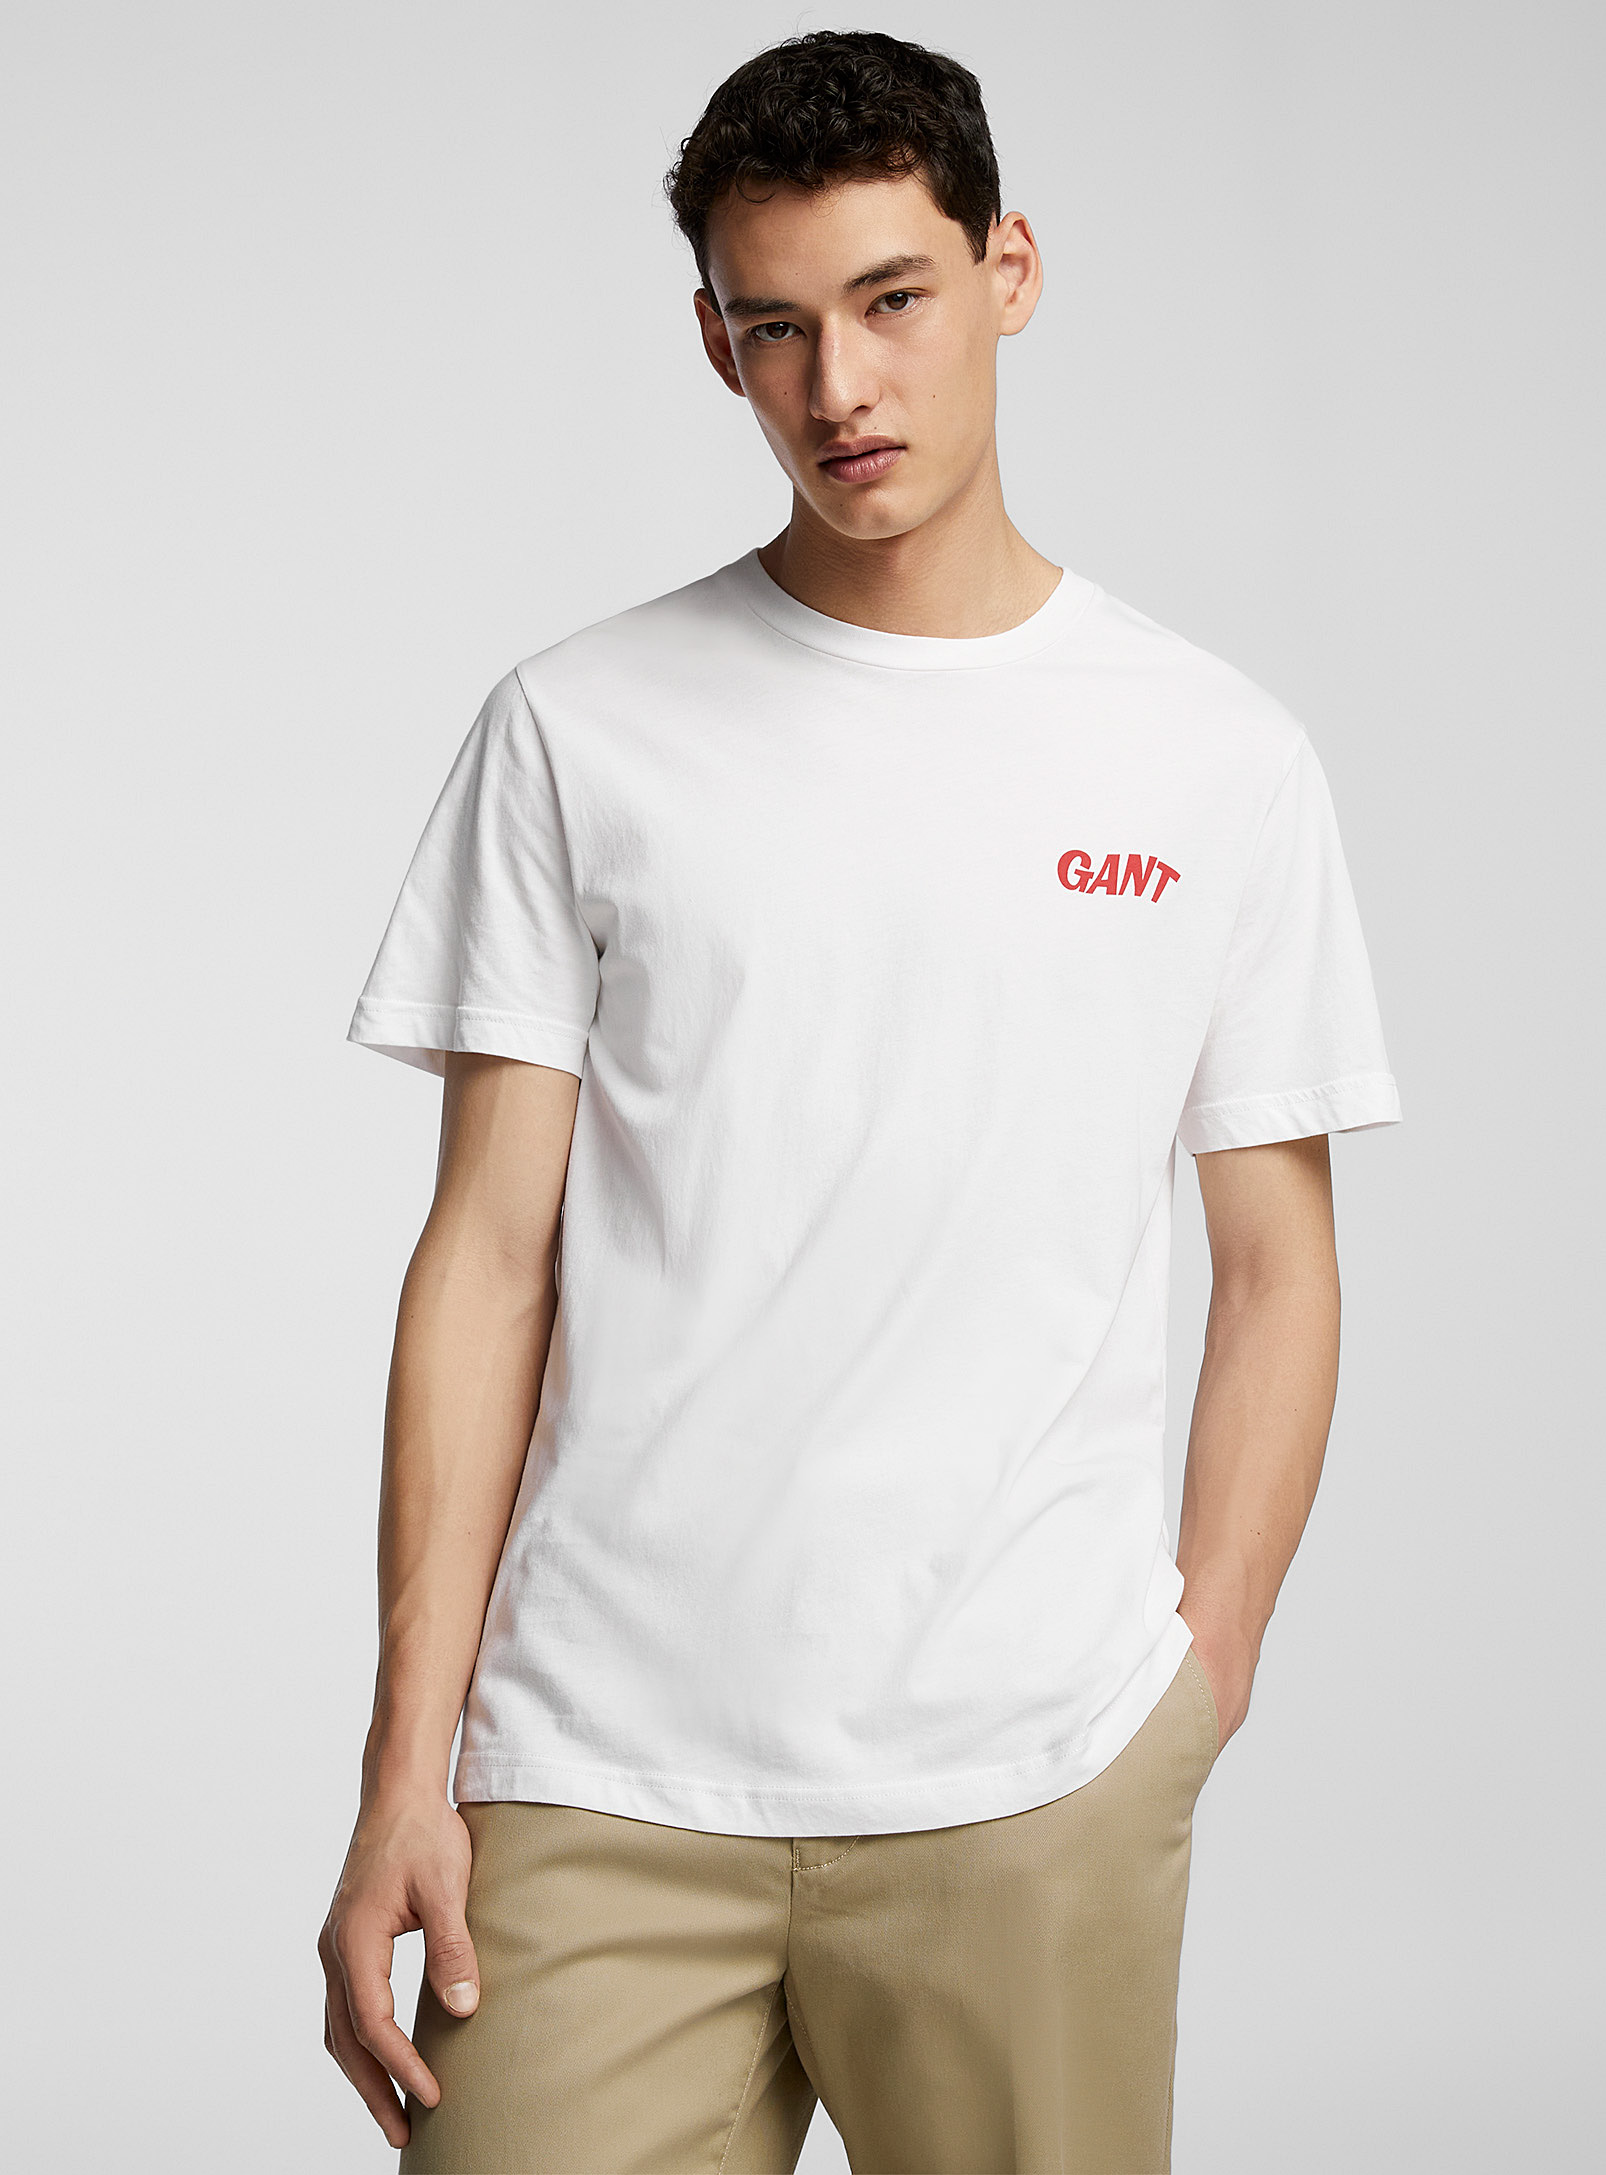 GANT - Men's Surf Academy T-shirt